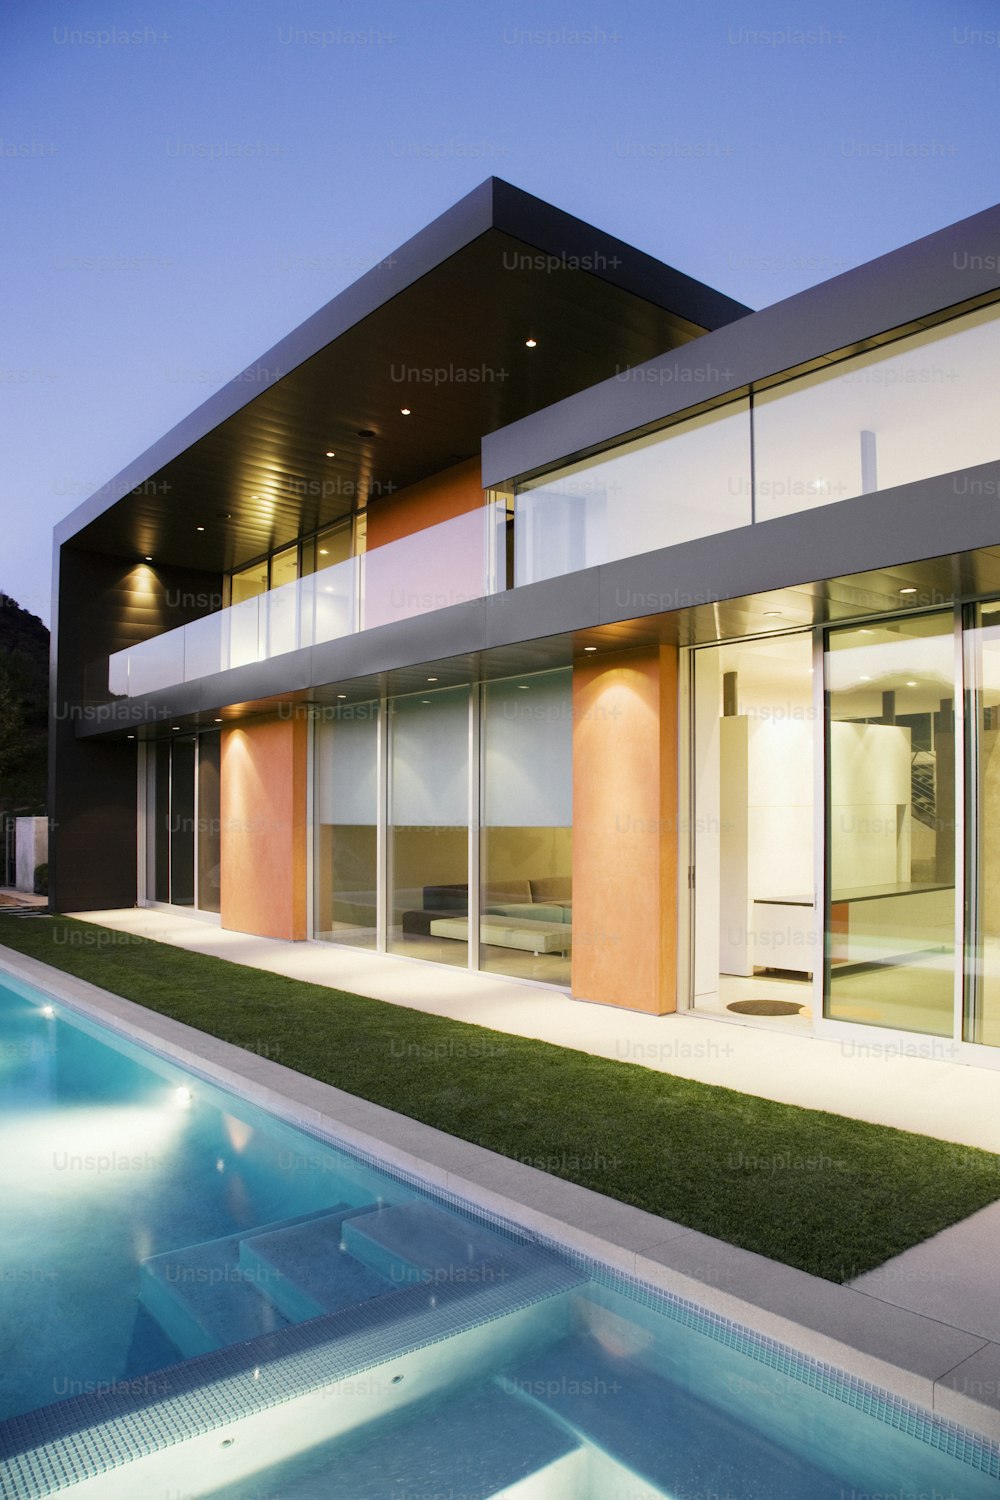 Una casa moderna con piscina frente a ella